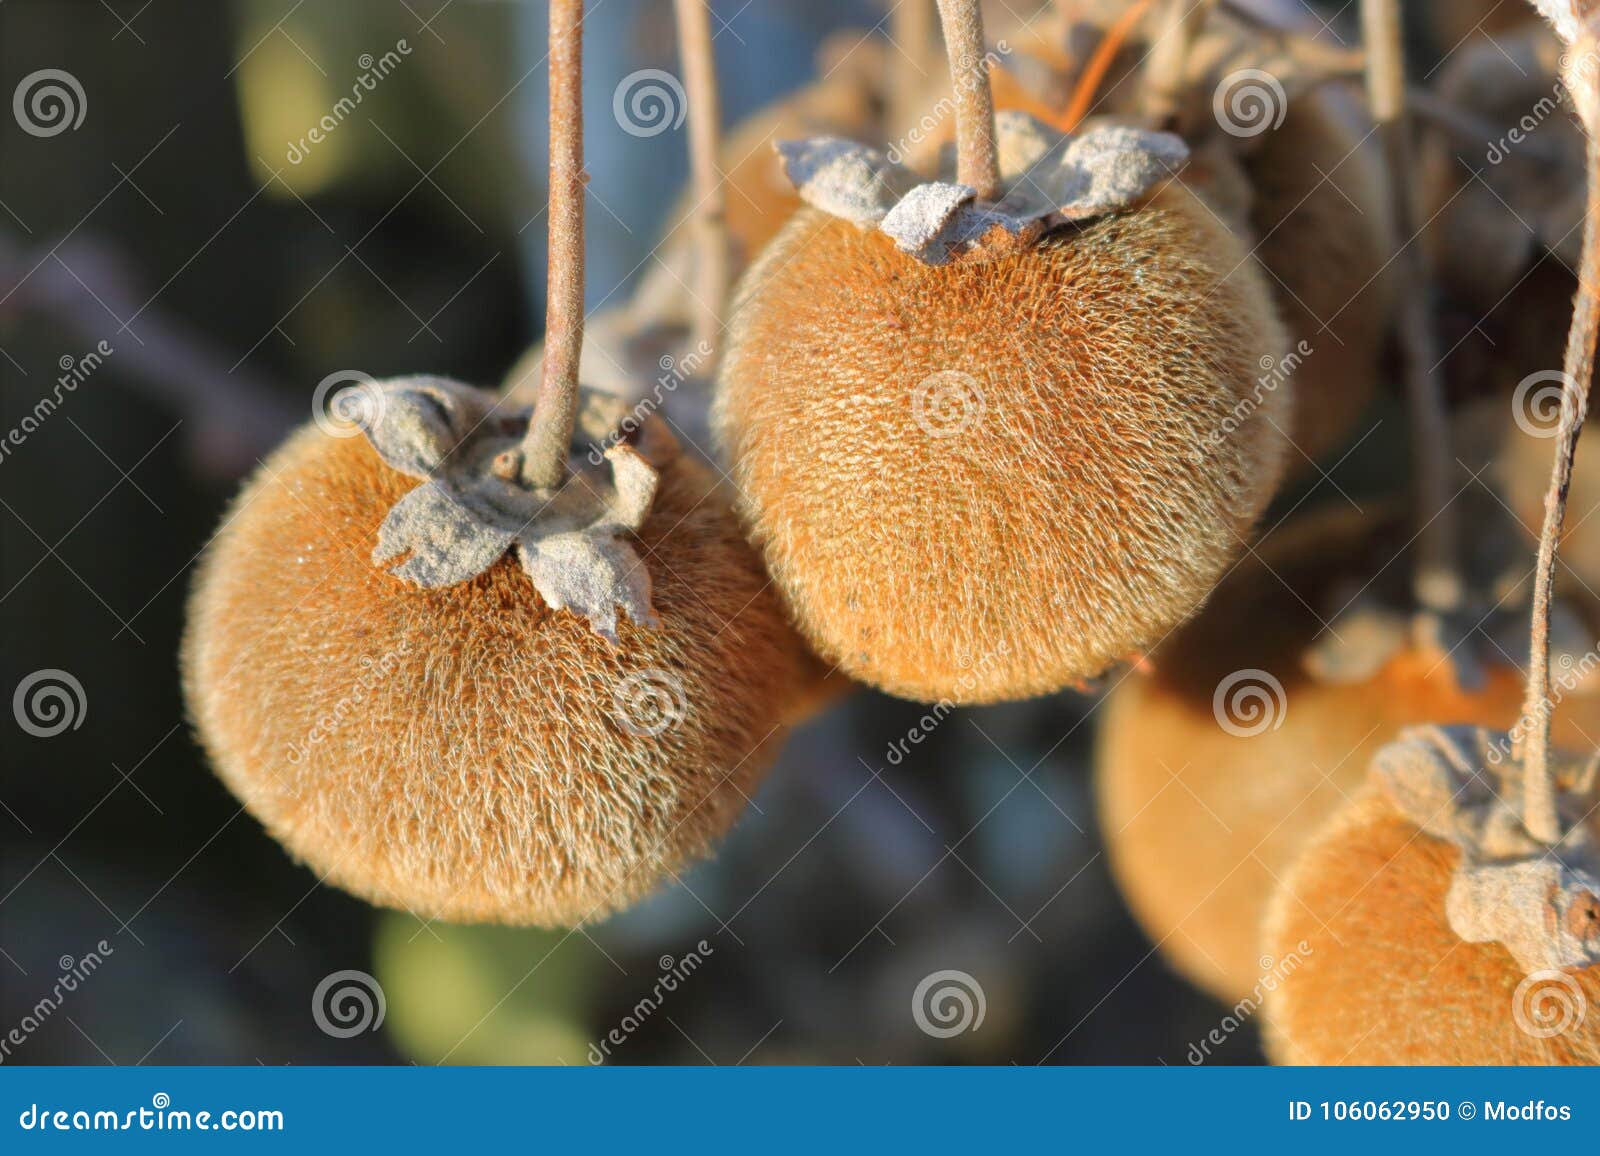 Sycamore Fruit Tree